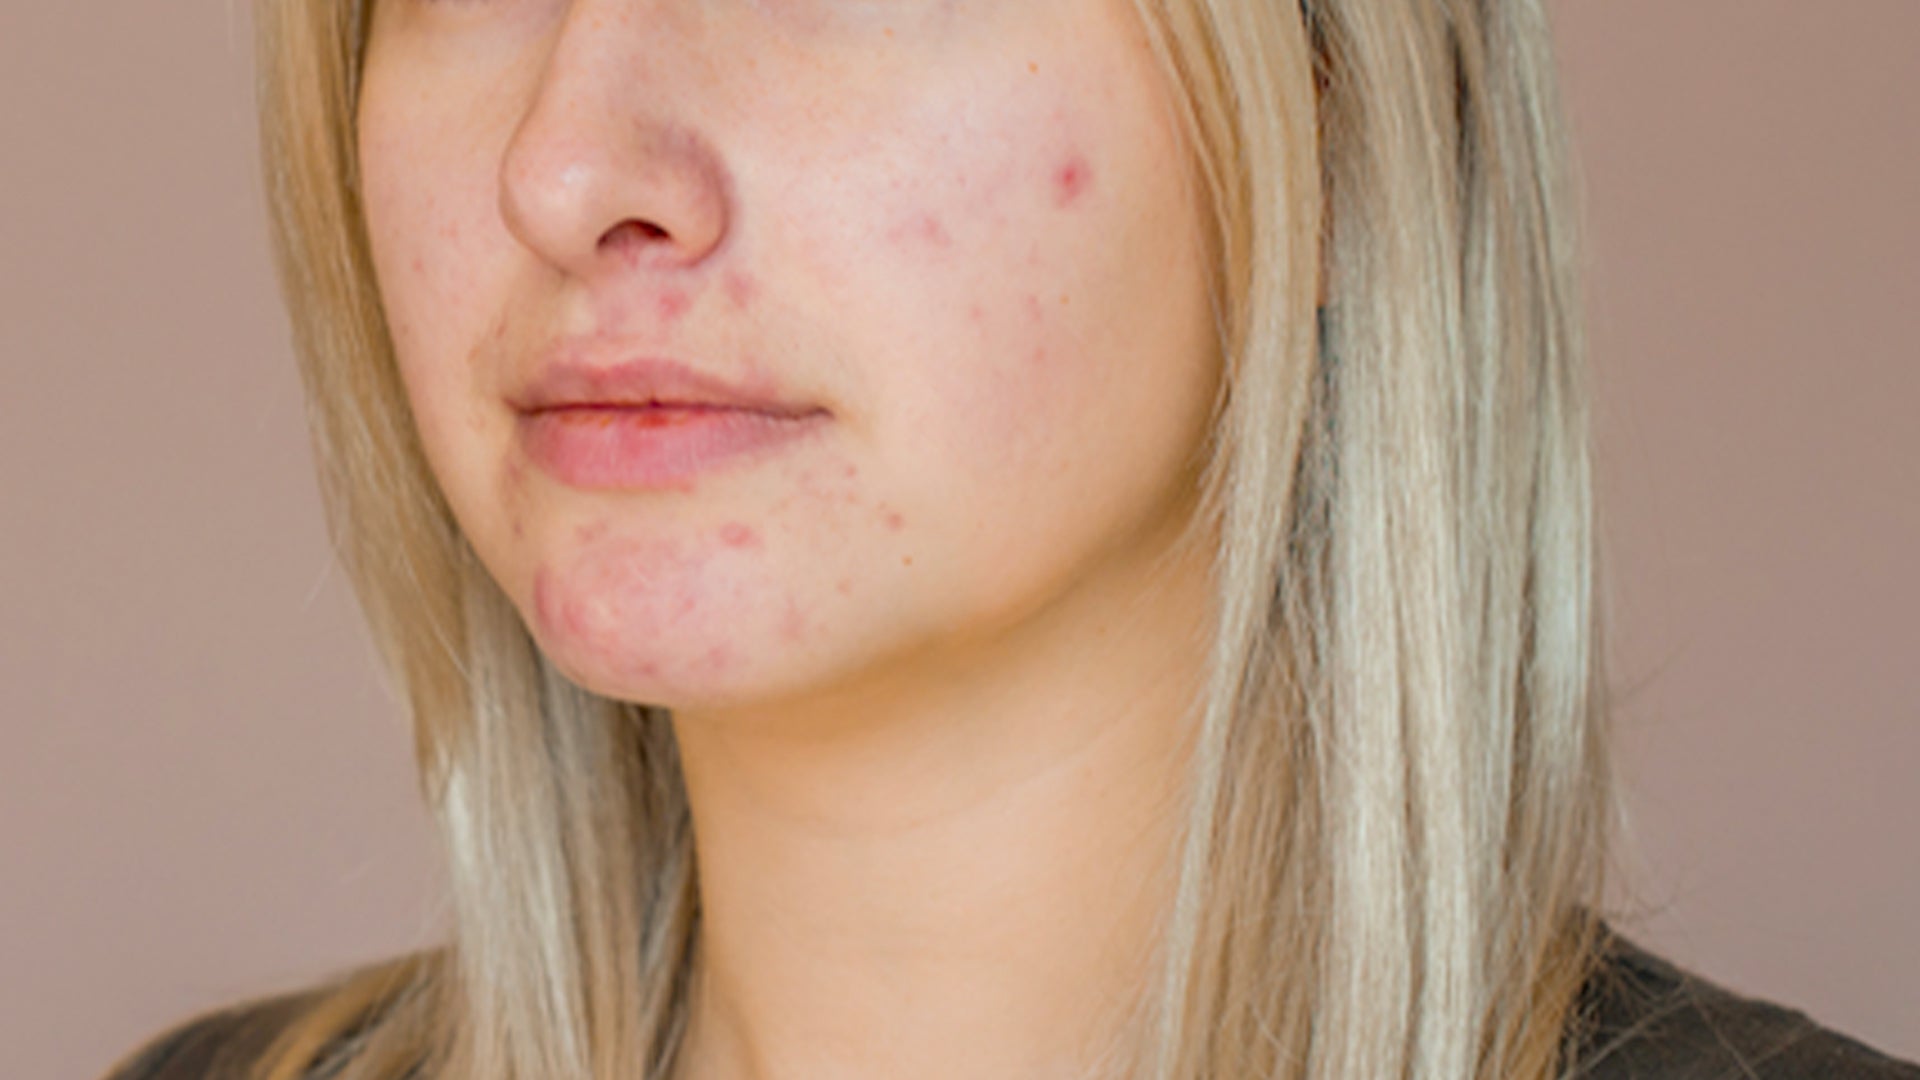 Foundation for acne prone skin